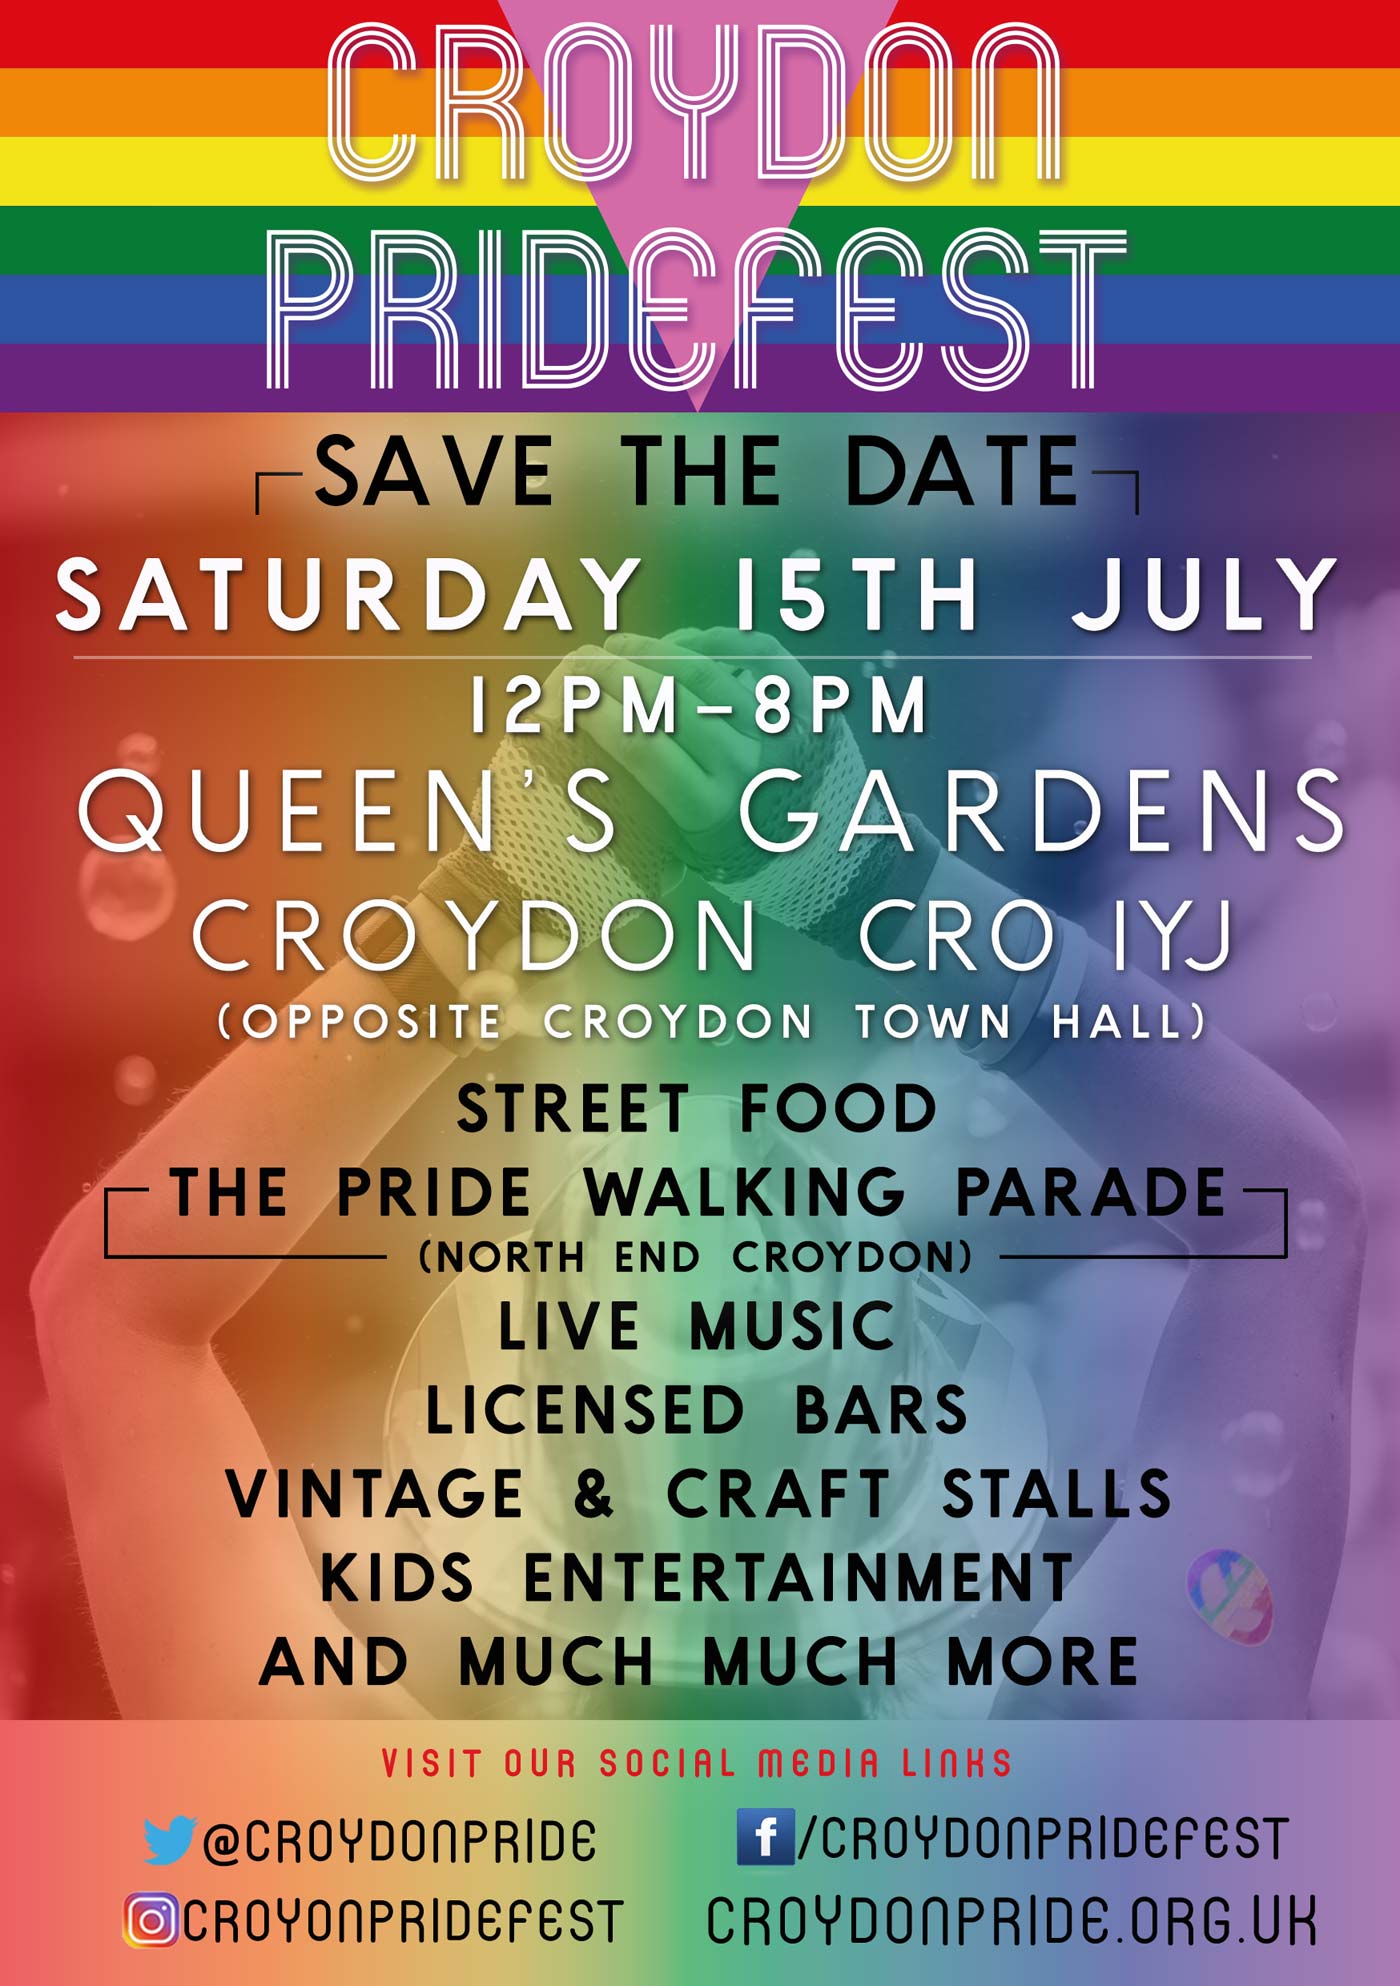 Croydon Pridefest - Saturday 15th July 2017